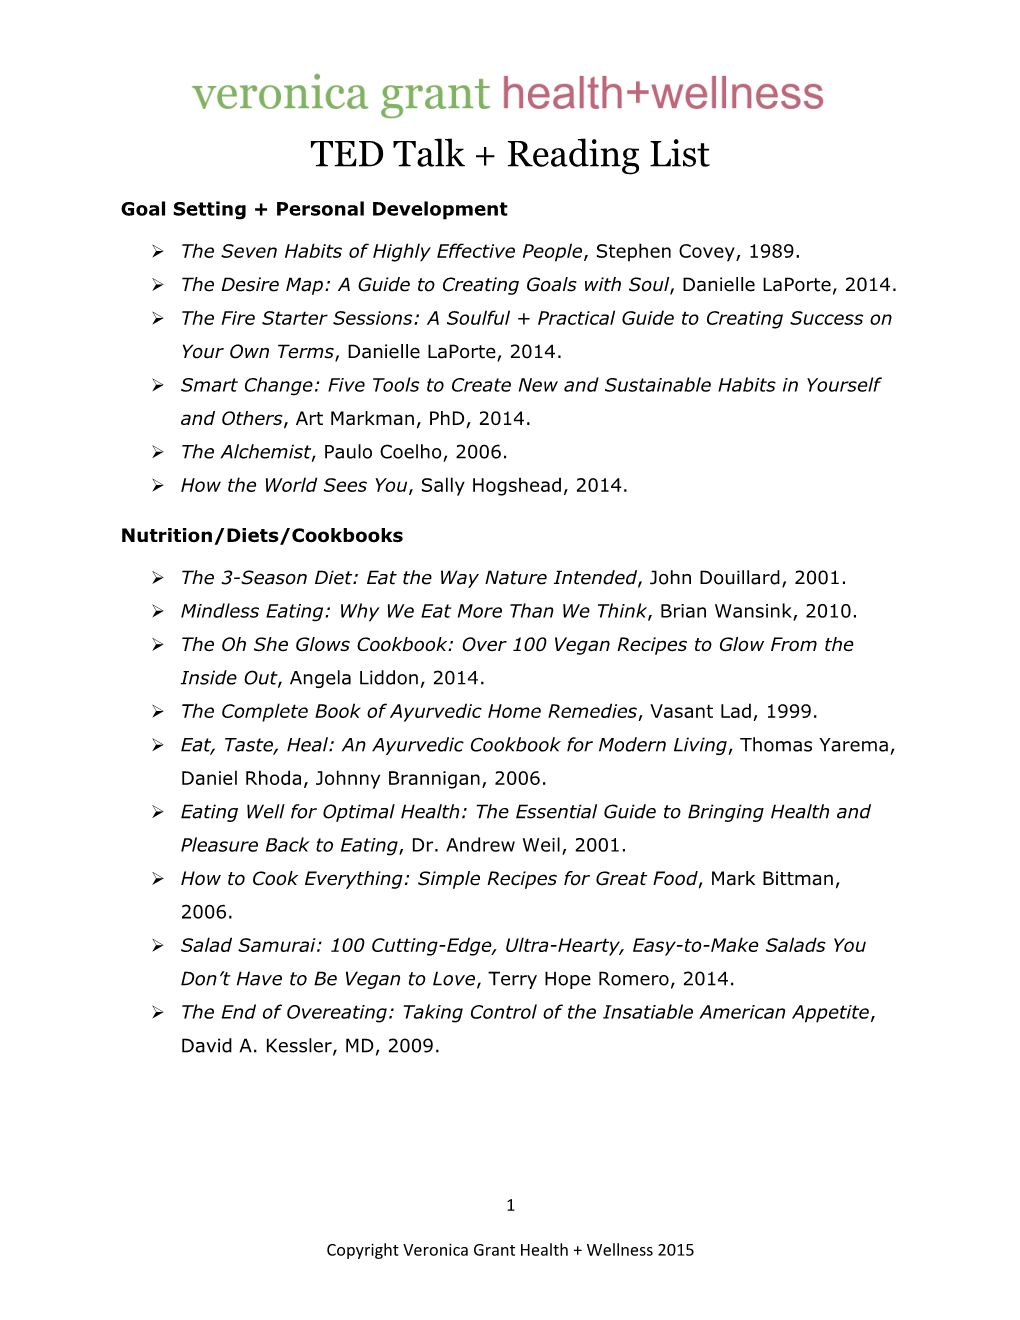 TED Talk + Reading List